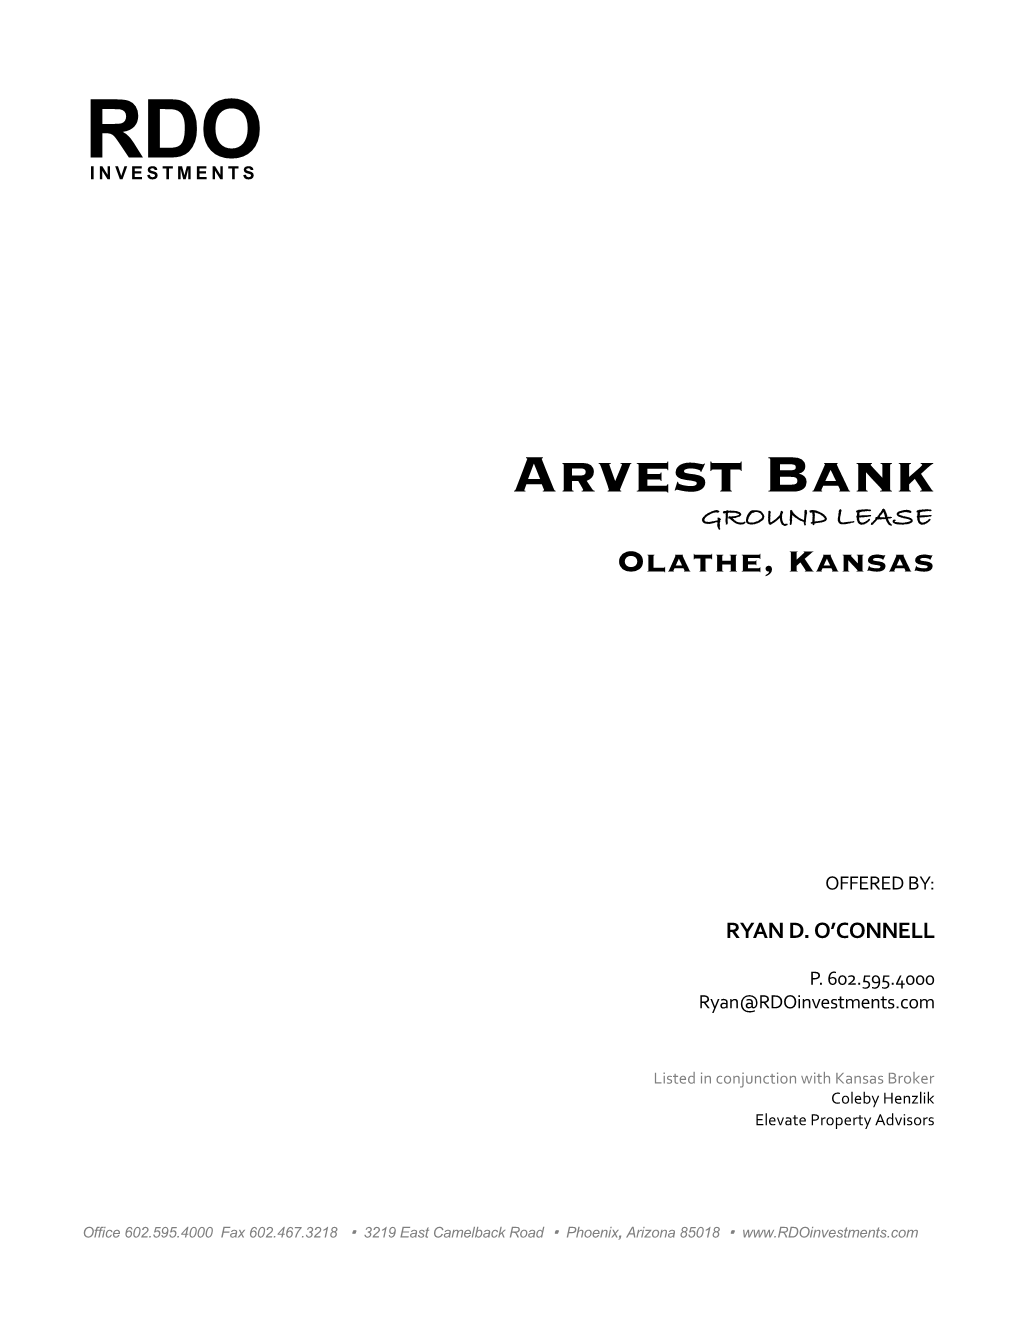 Arvest Bank GROUND LEASE Olathe, Kansas